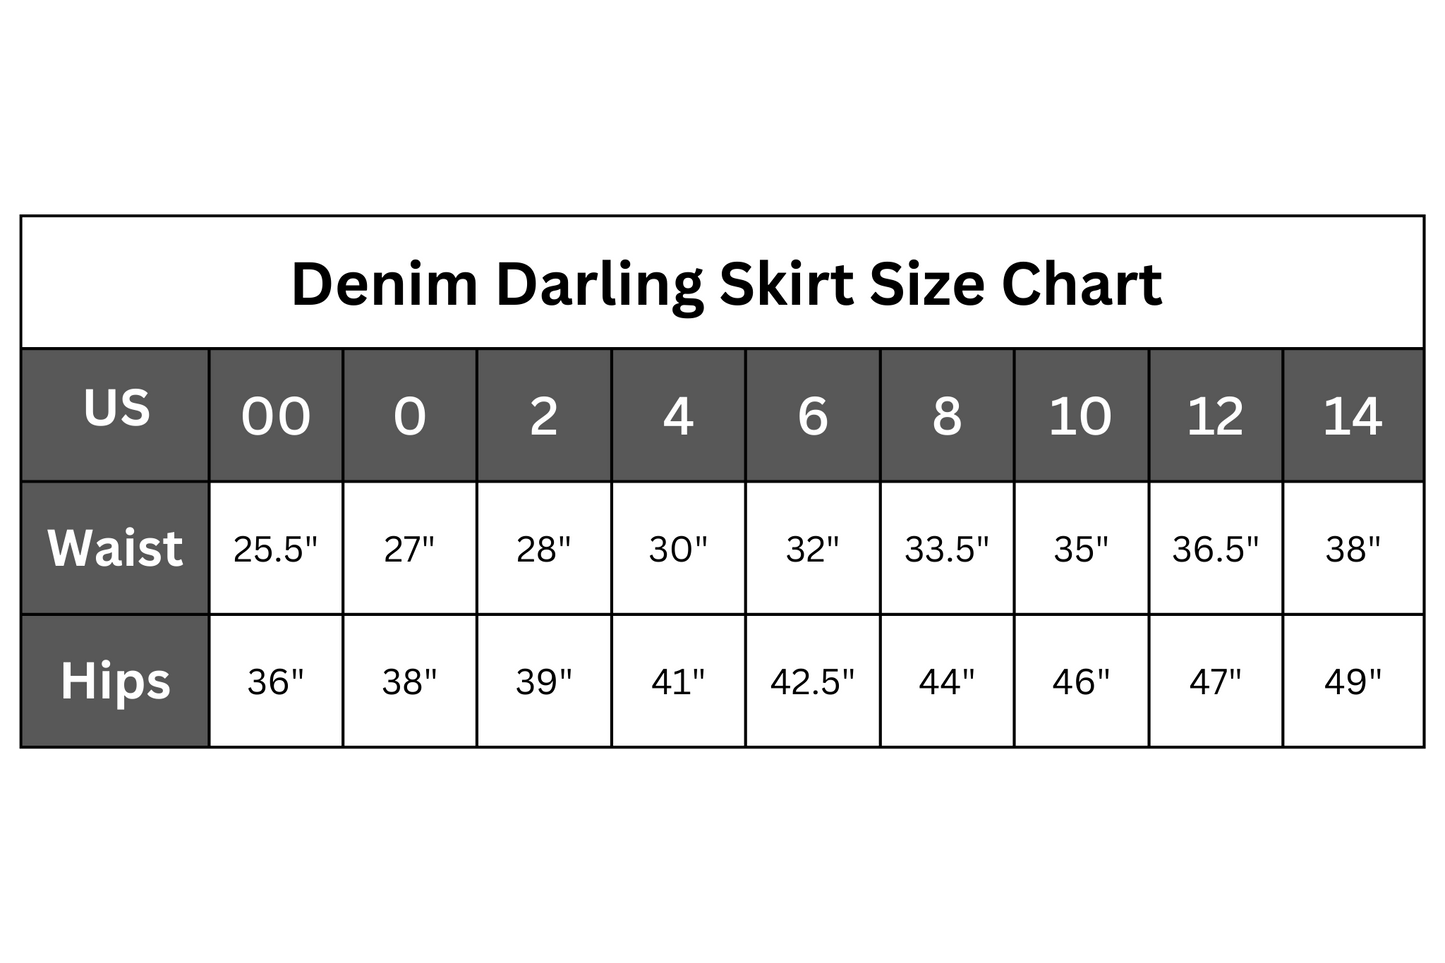 Denim Darling Skirt